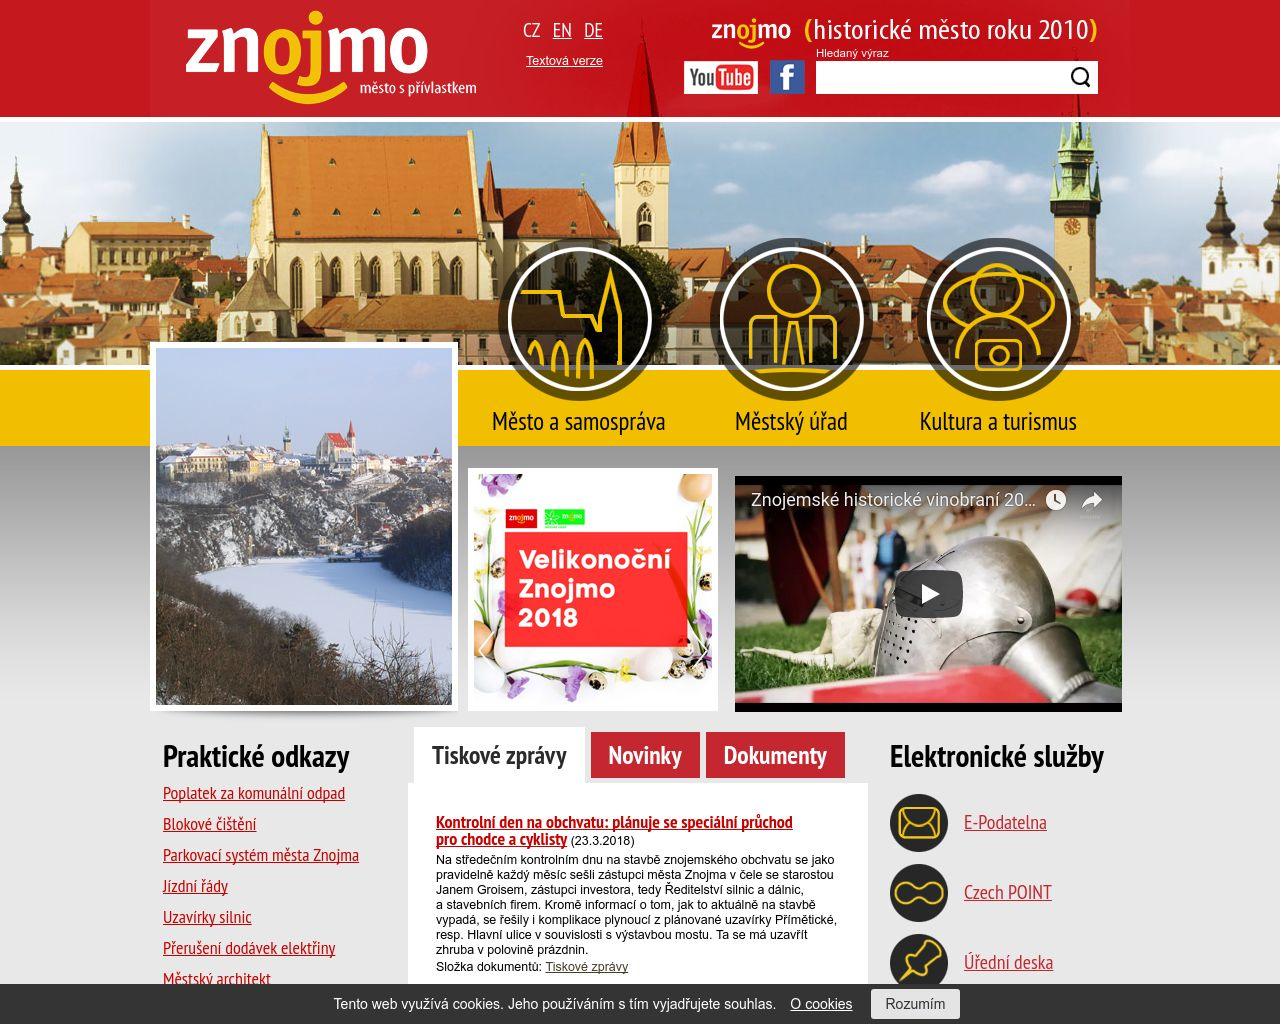 Site Image znojmocity.cz v 1280x1024